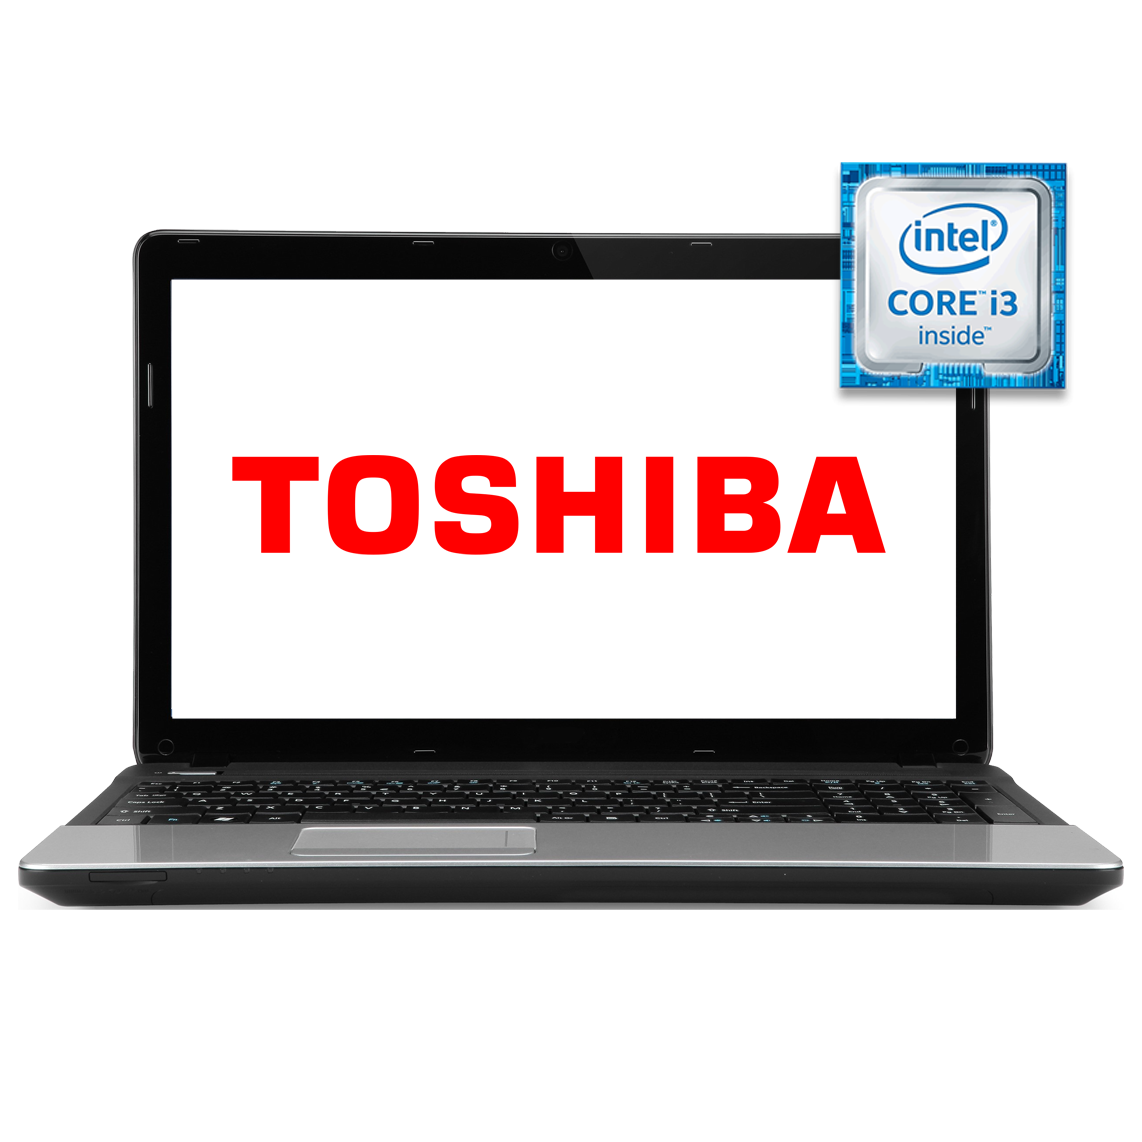 Toshiba - 17.3 inch Core i3 2nd Gen